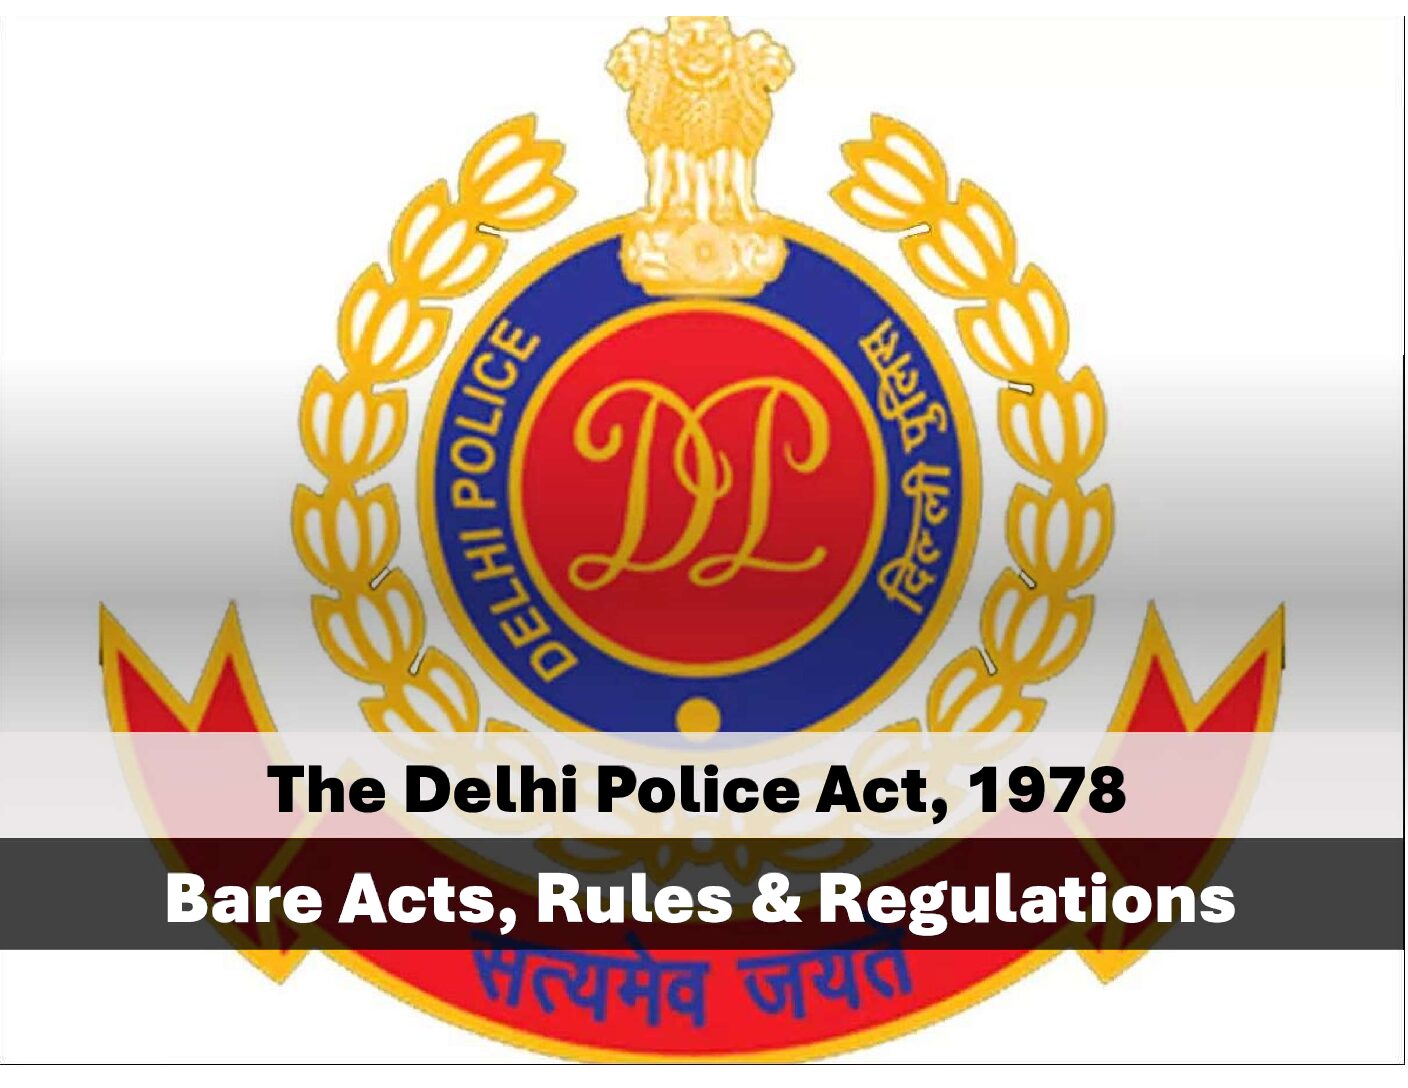 The Delhi Police Act, 1978